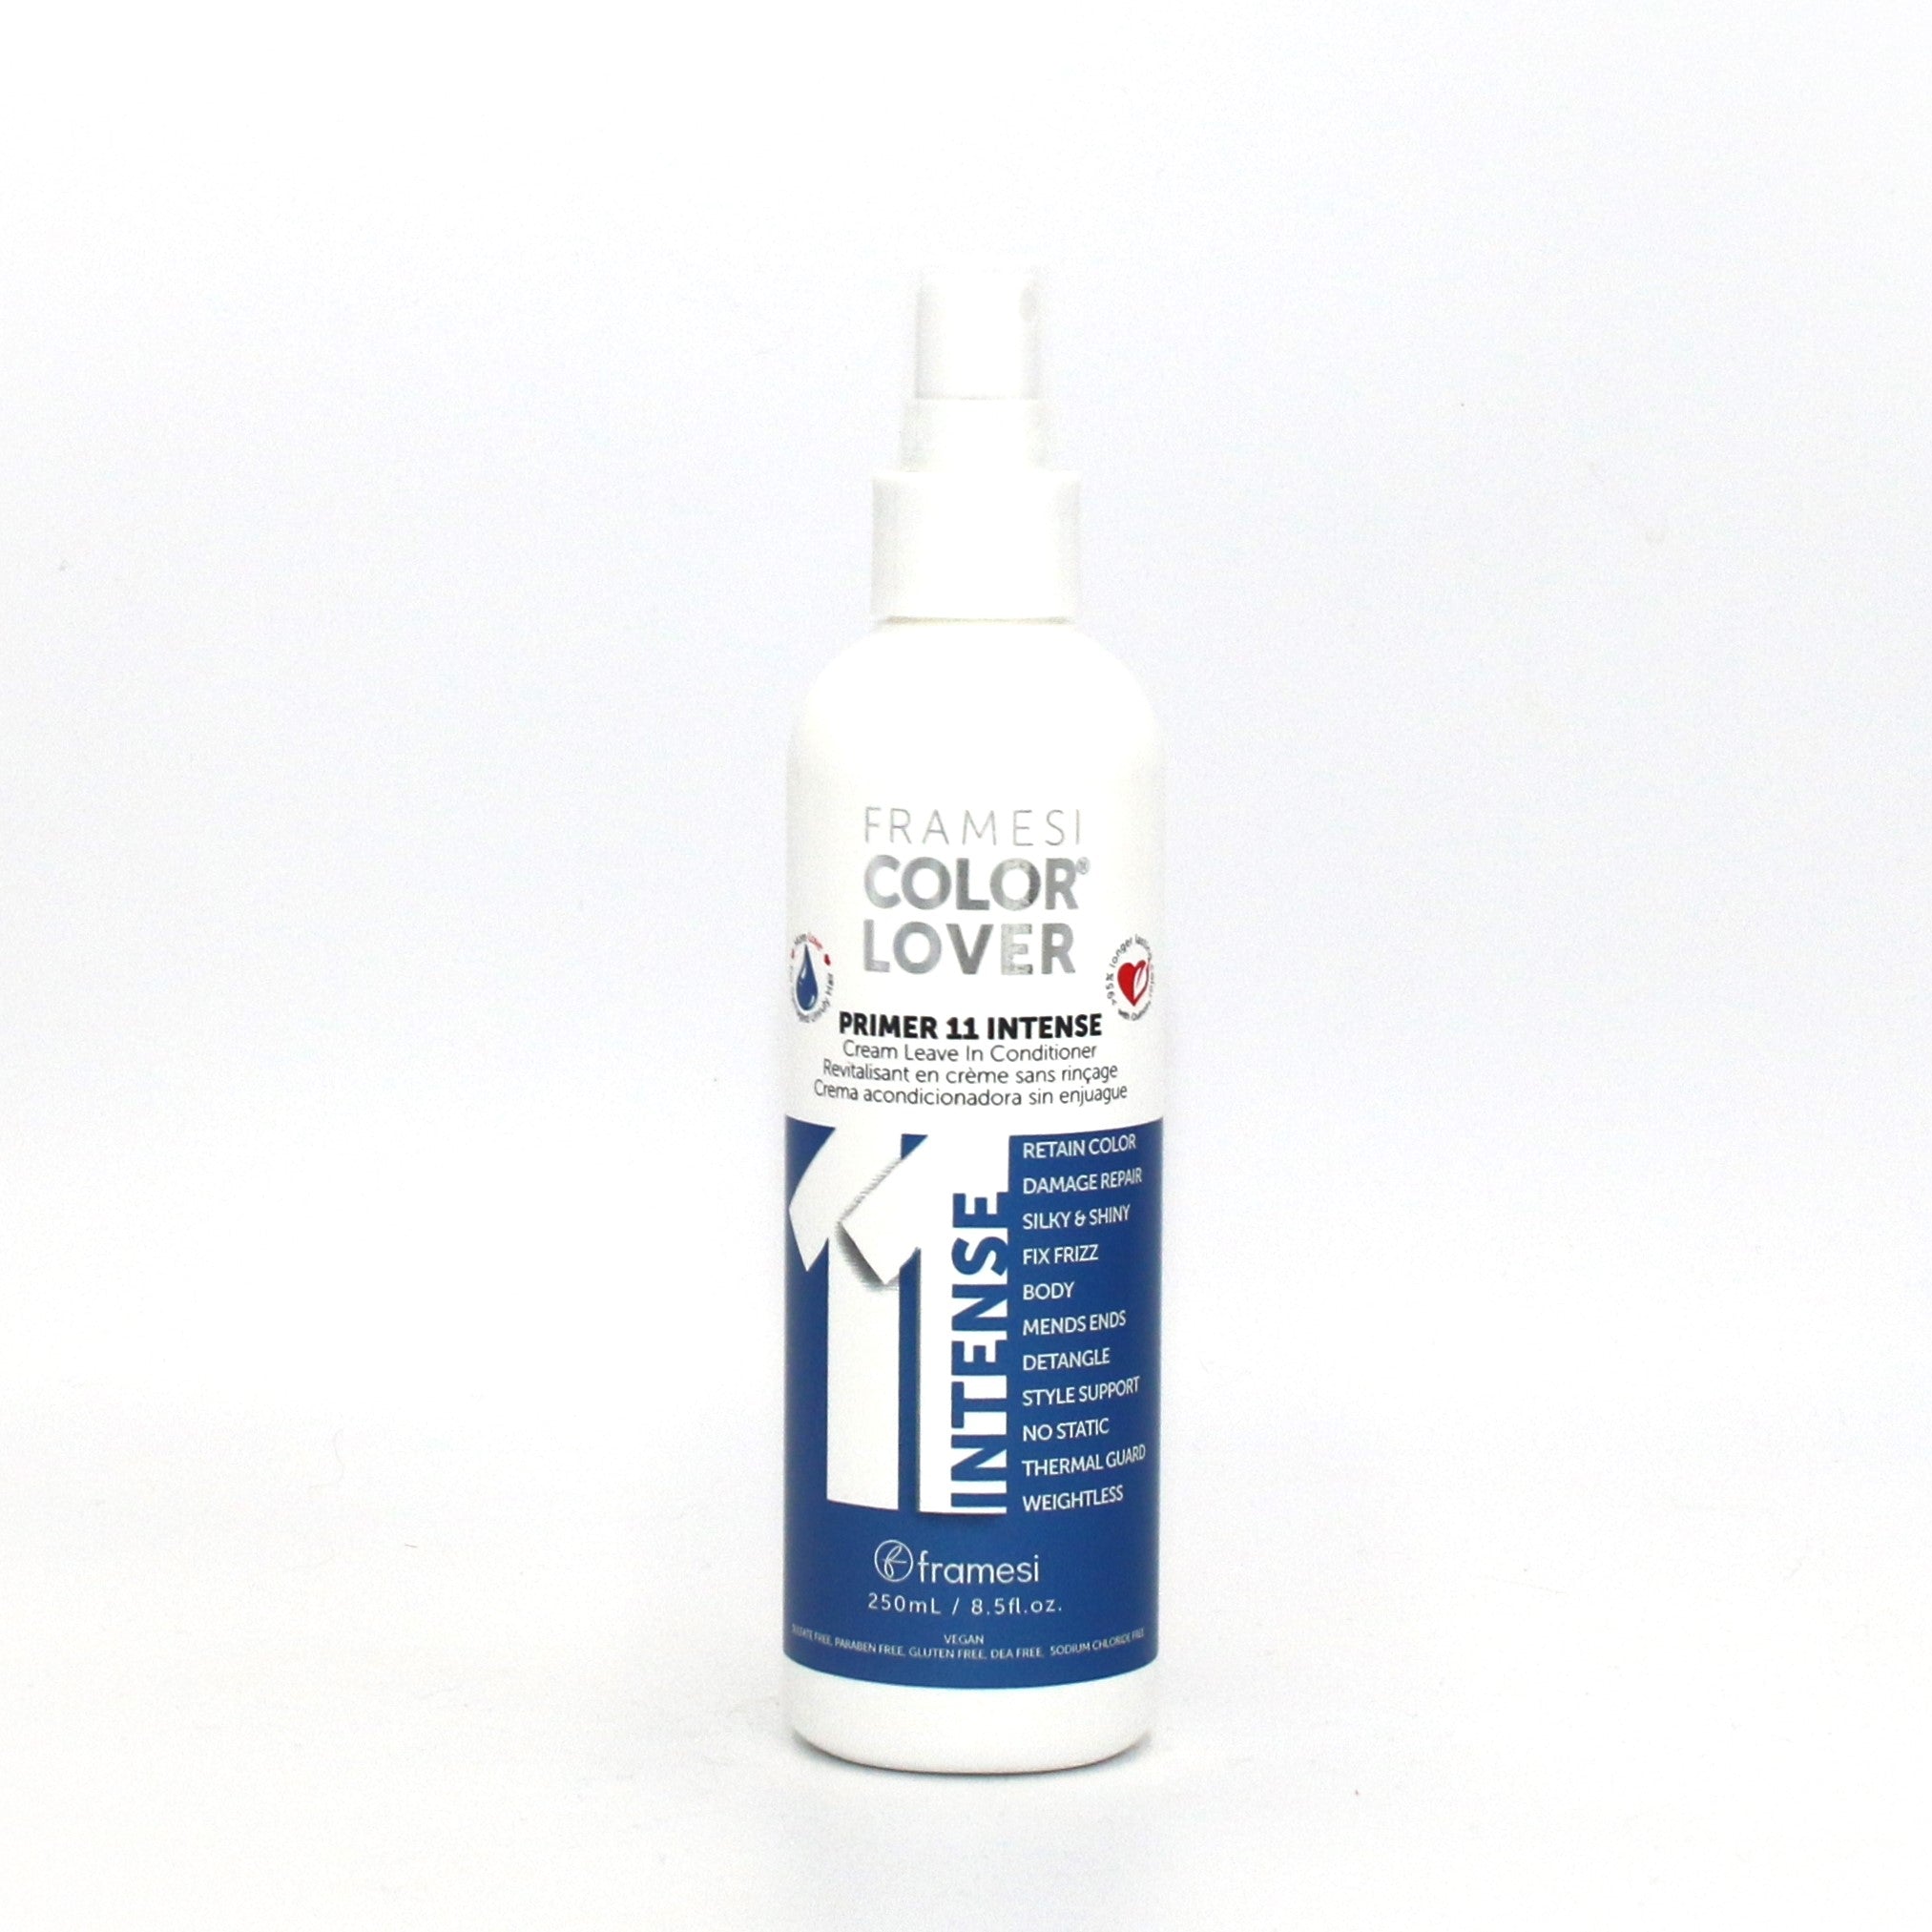 FRAMESI Color Lover Primer 11 Intense Cream Leave In Conditioner 8.5 oz